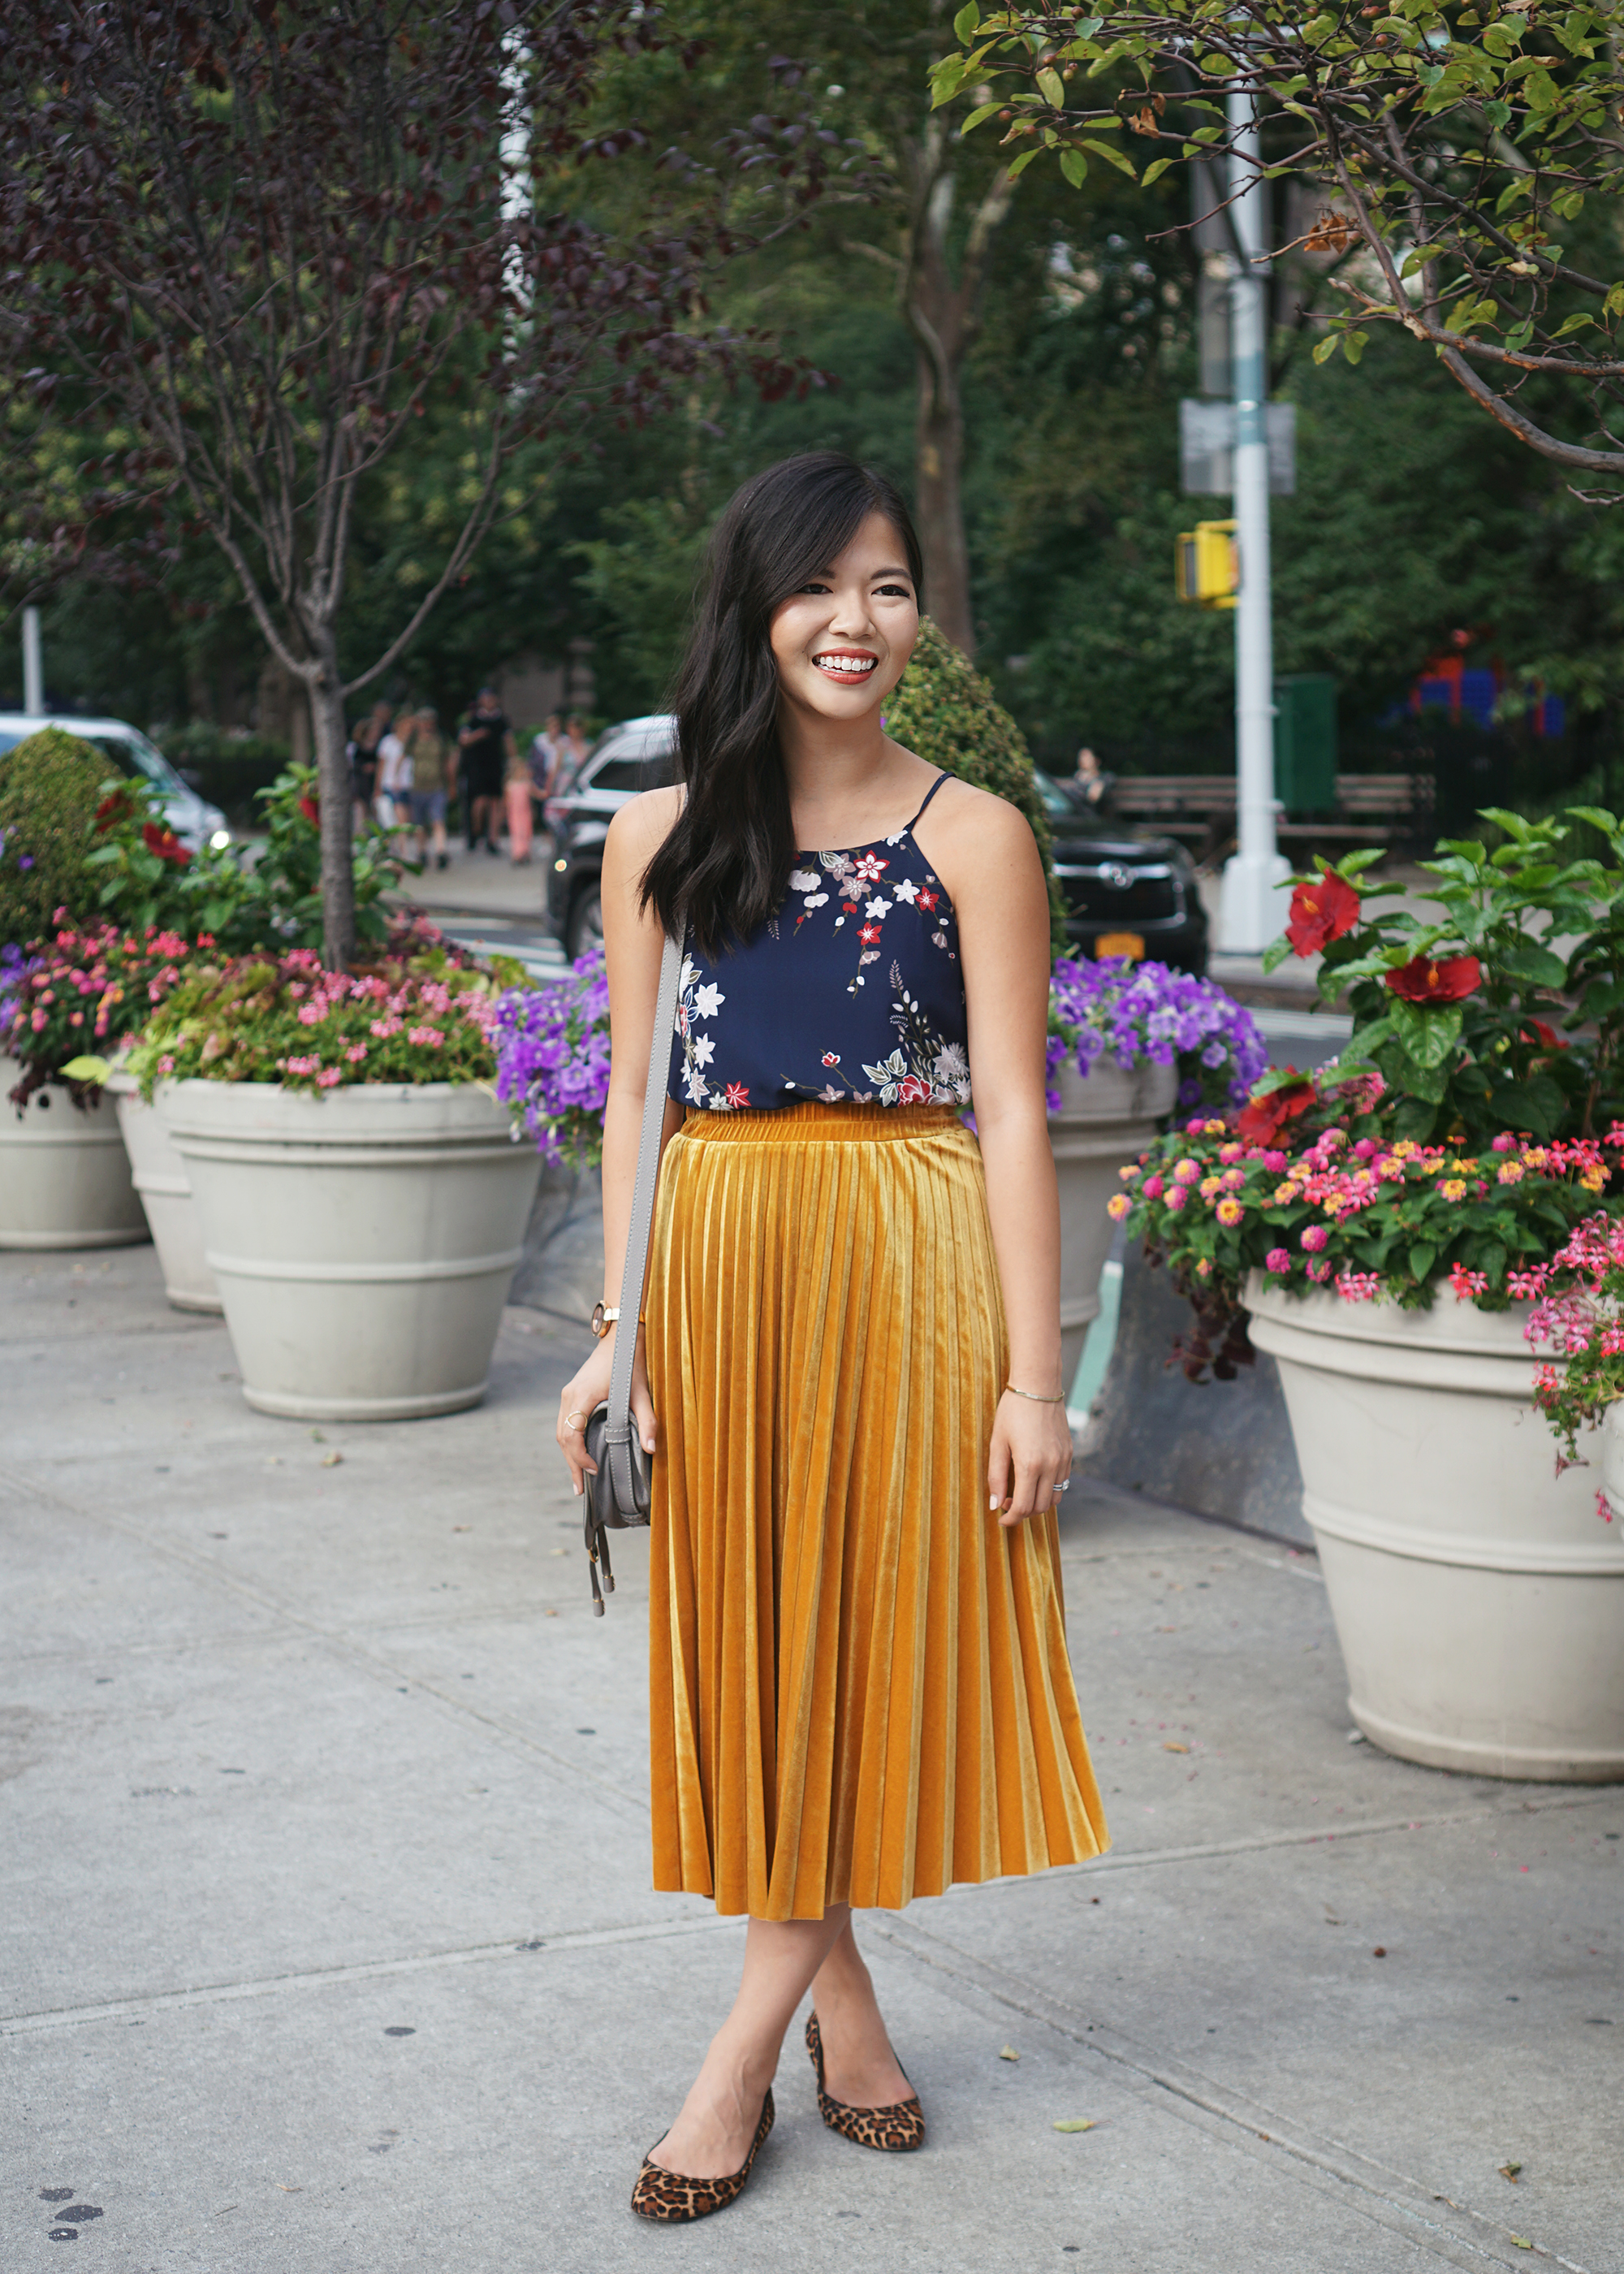 Fall Outfit Inspiration: Navy Floral Top & Mustard Velvet Skirt